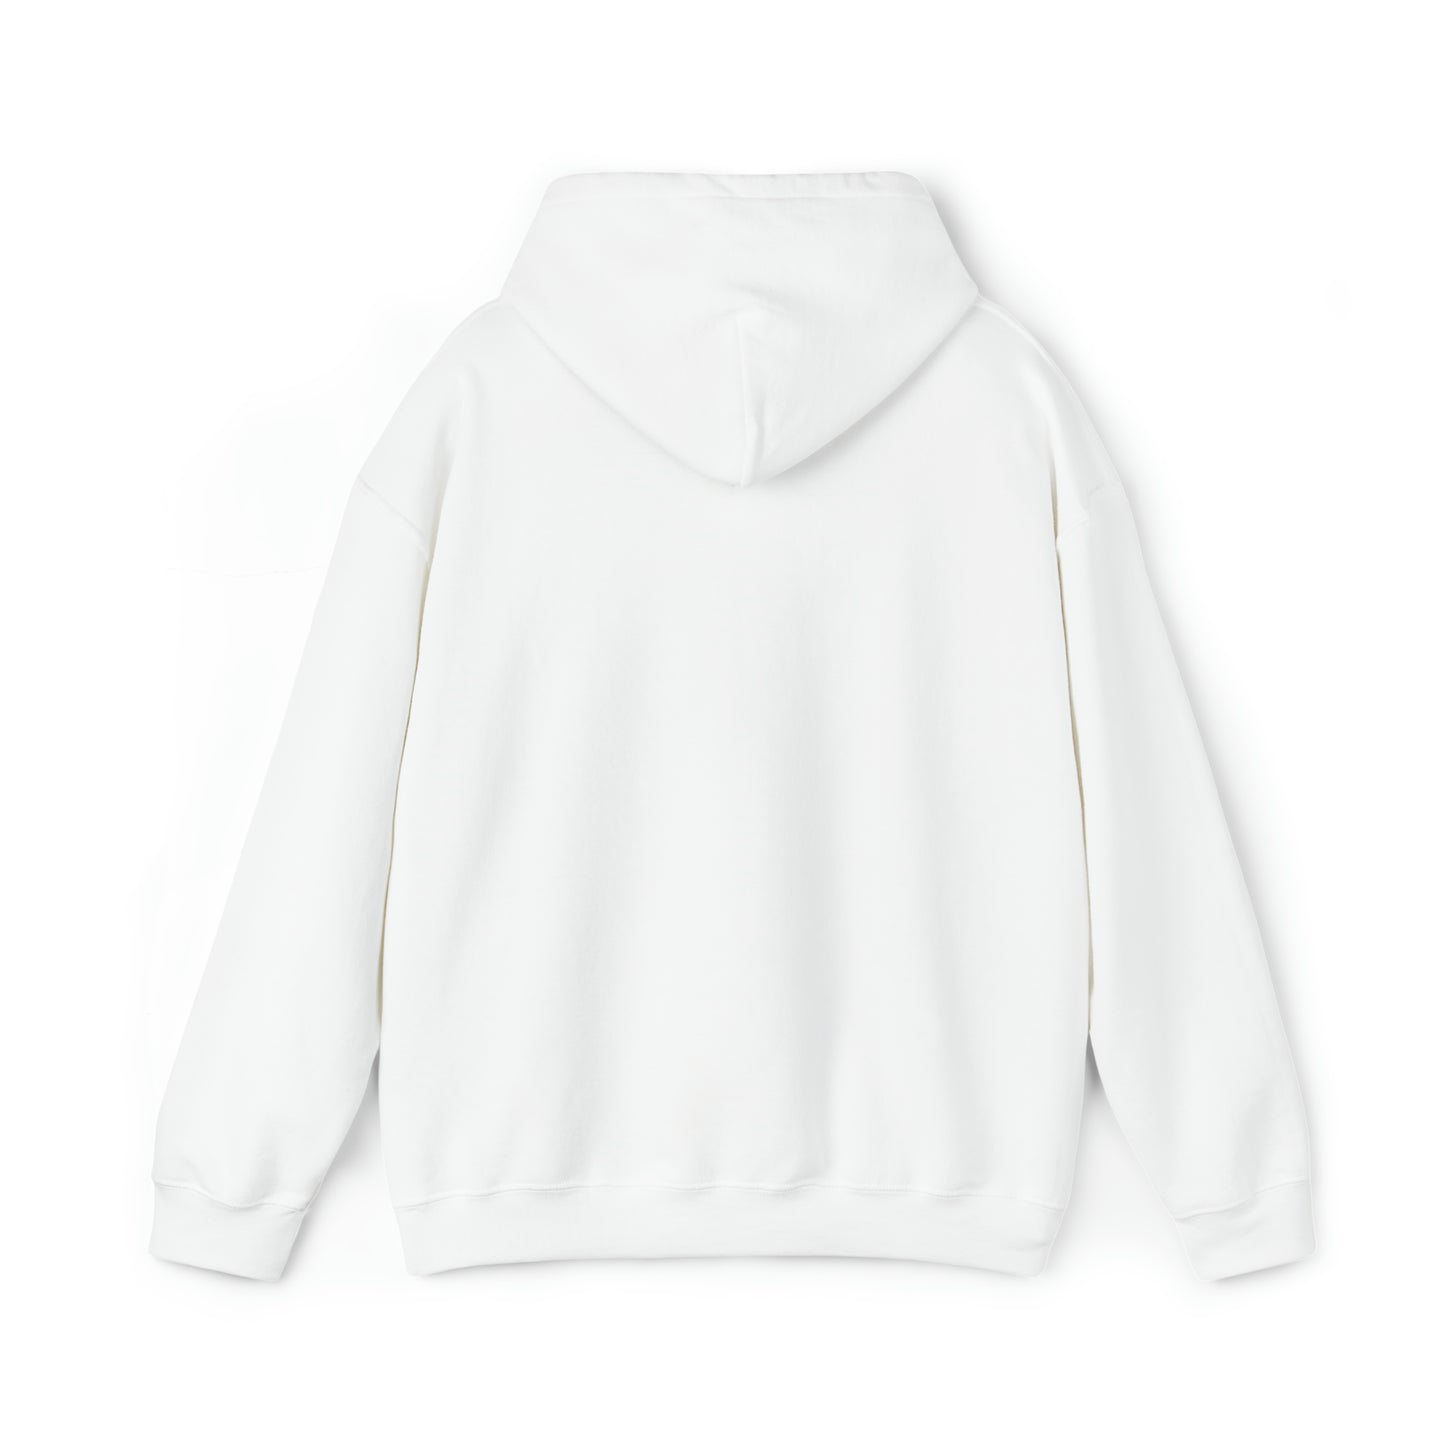 Rise Of The JW's Unisex Heavy Blend™ Hooded Sweatshirt